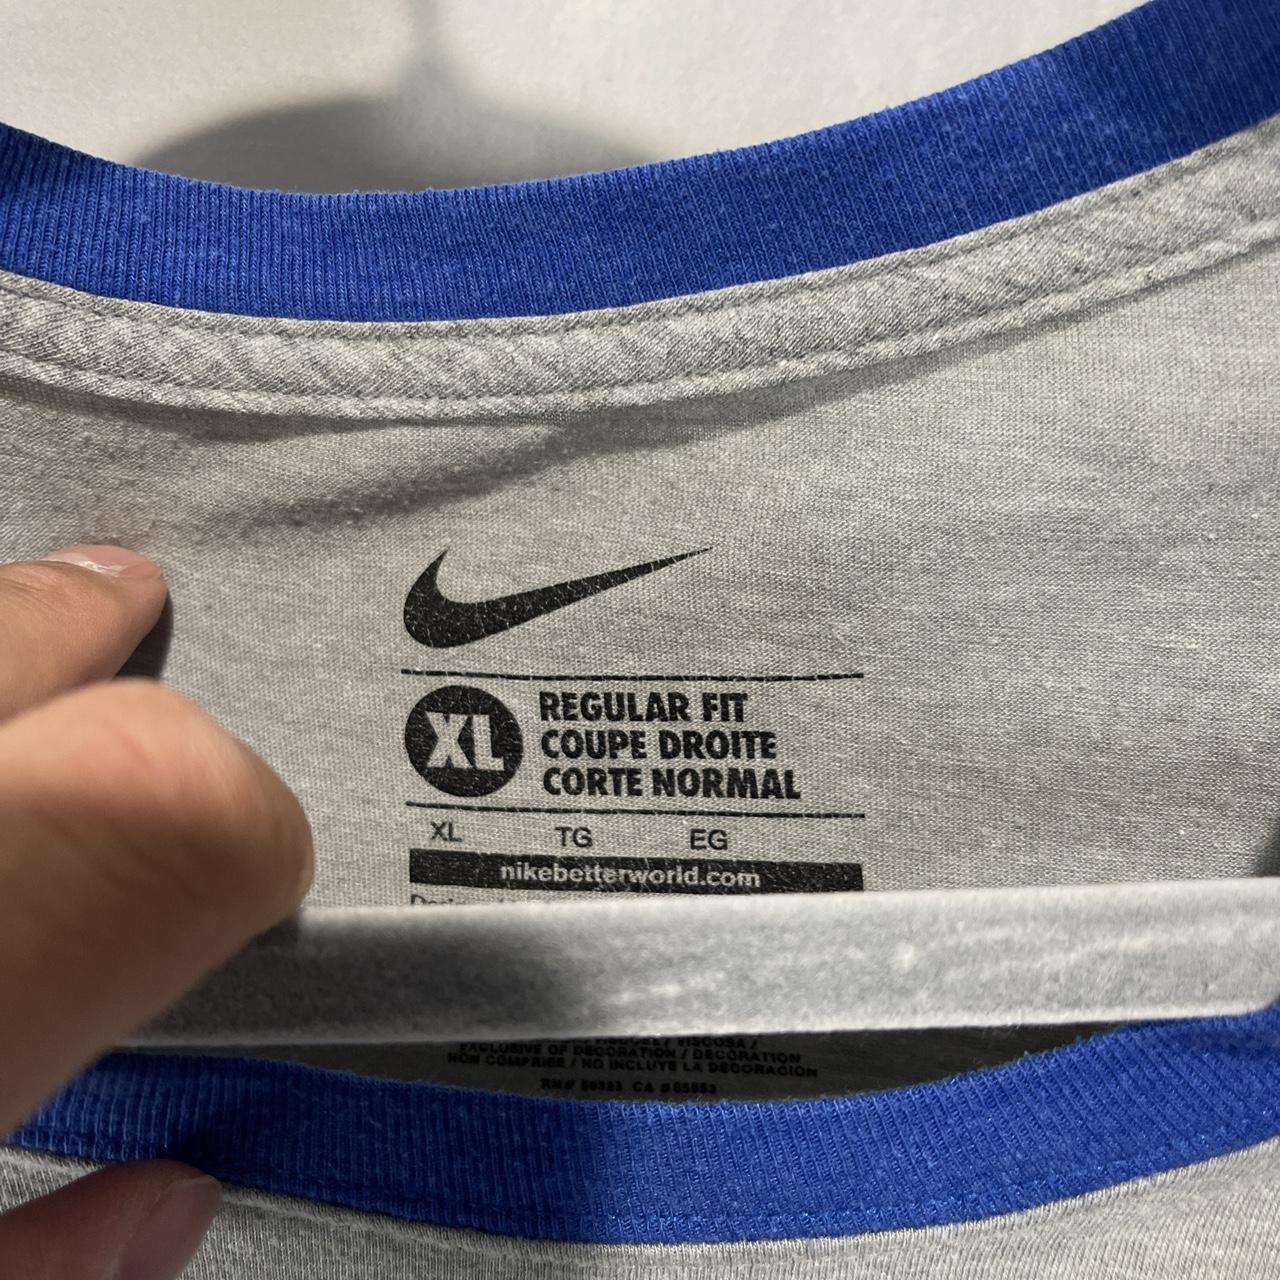 Grey Nike Mlb LA Dodgers T-Shirt